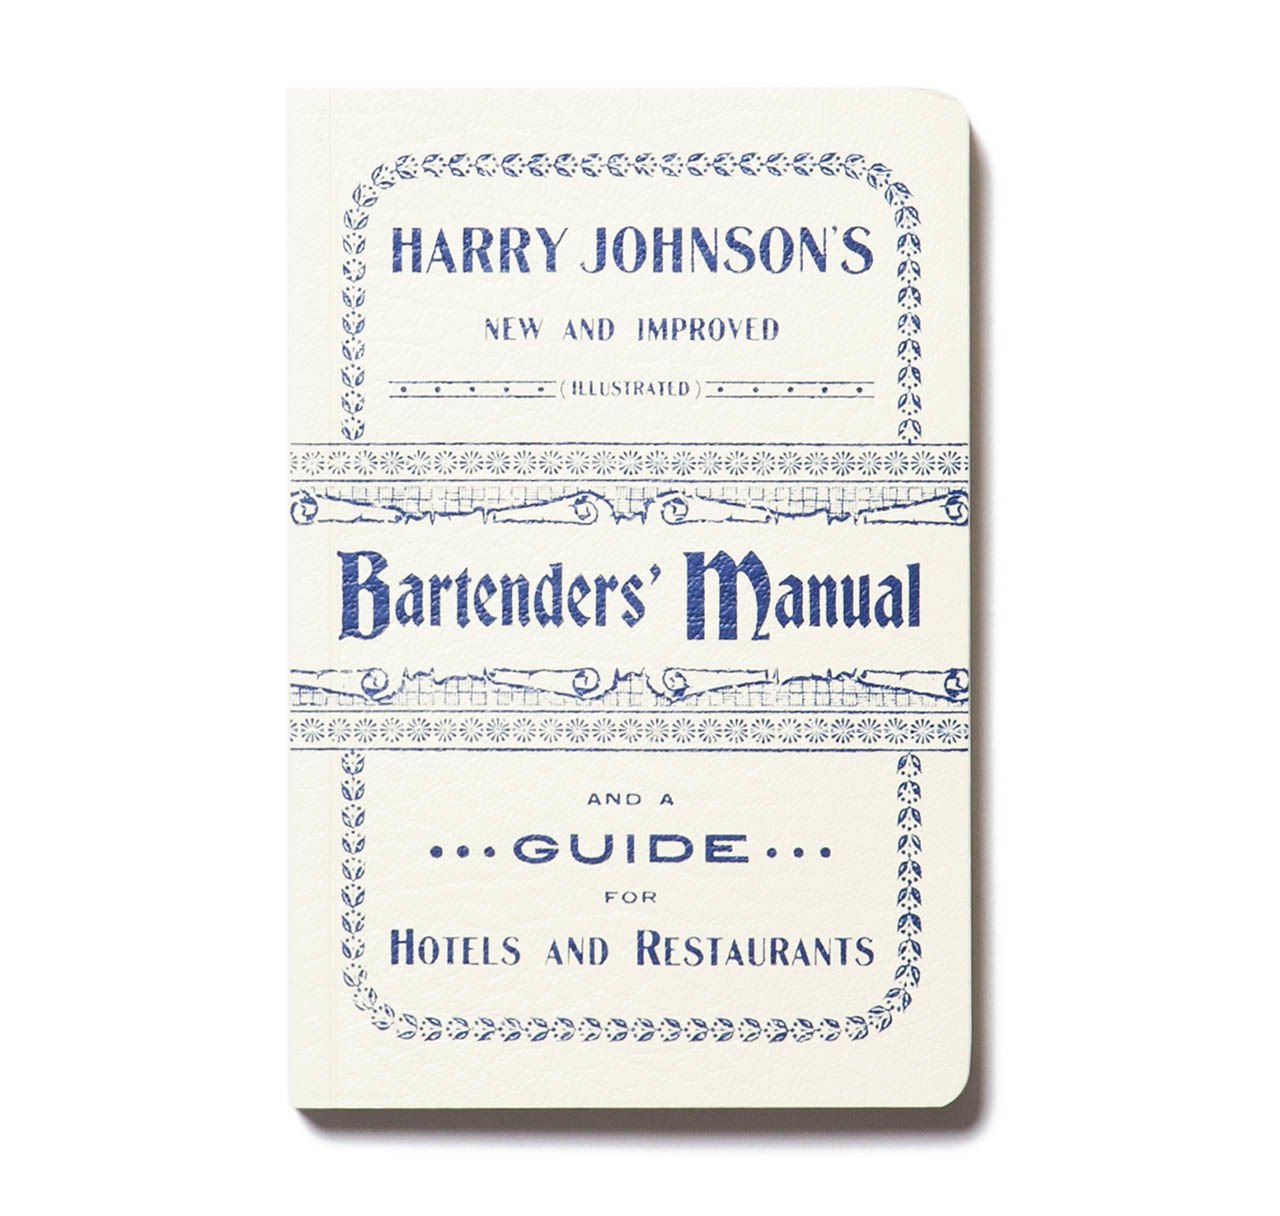 Bartender's Manual by Harry Johnson